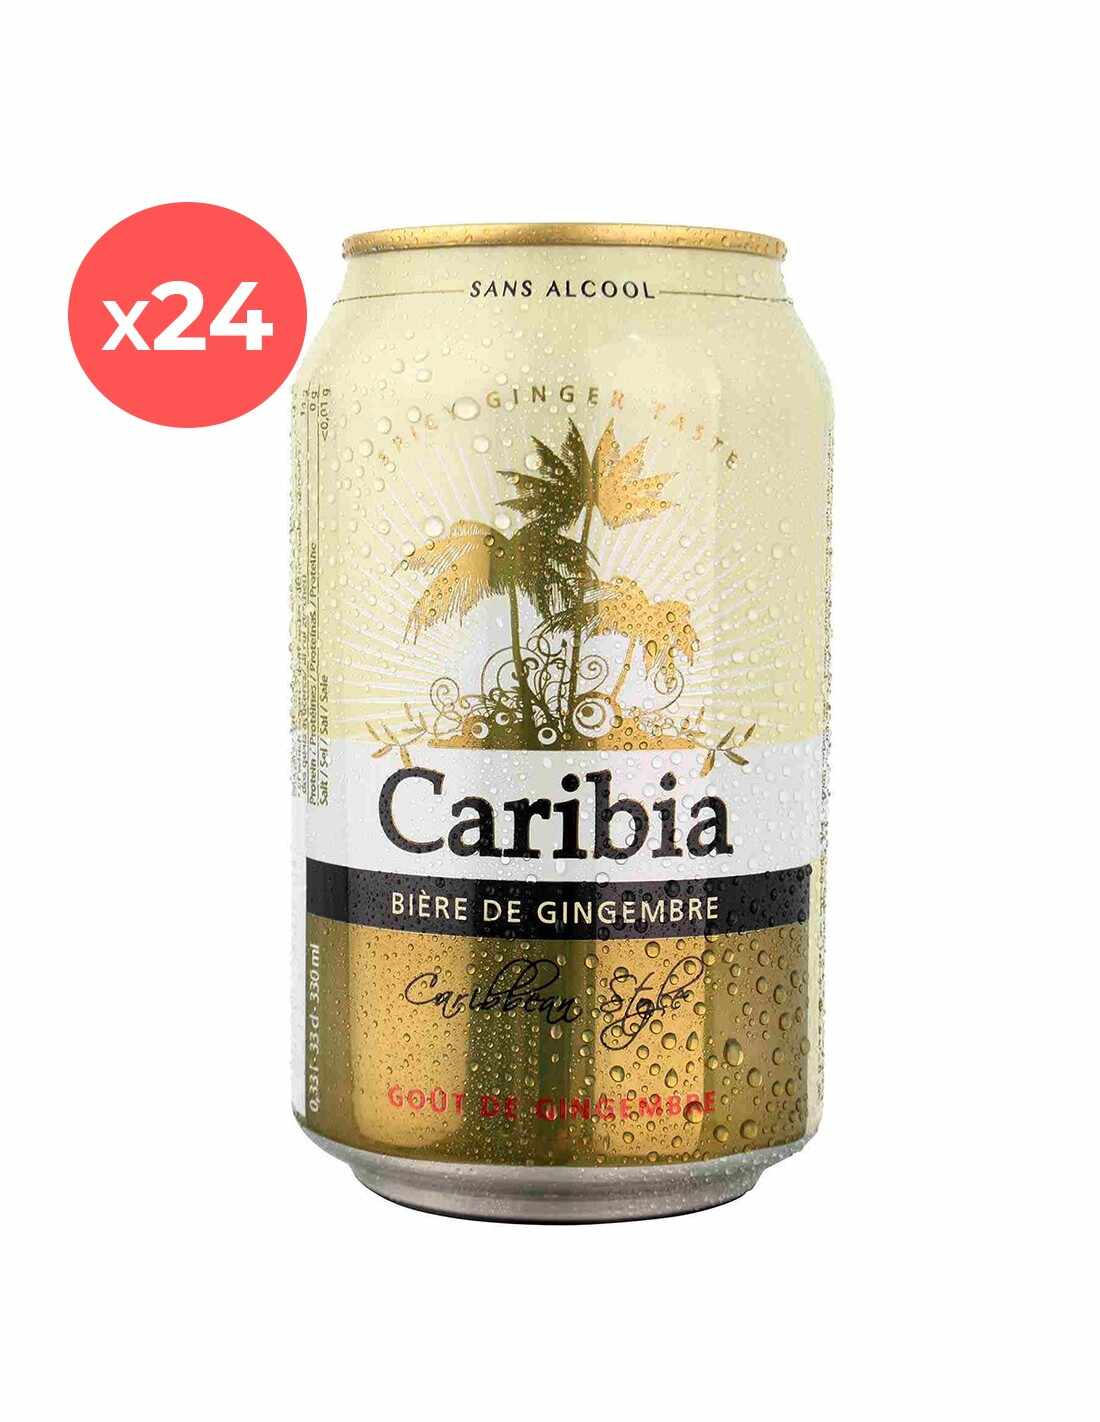 Bax 24 bucati bere blonda, fara alcool, Caribia Ginger, 0% alc., 0.33L, sticla, Danemarca